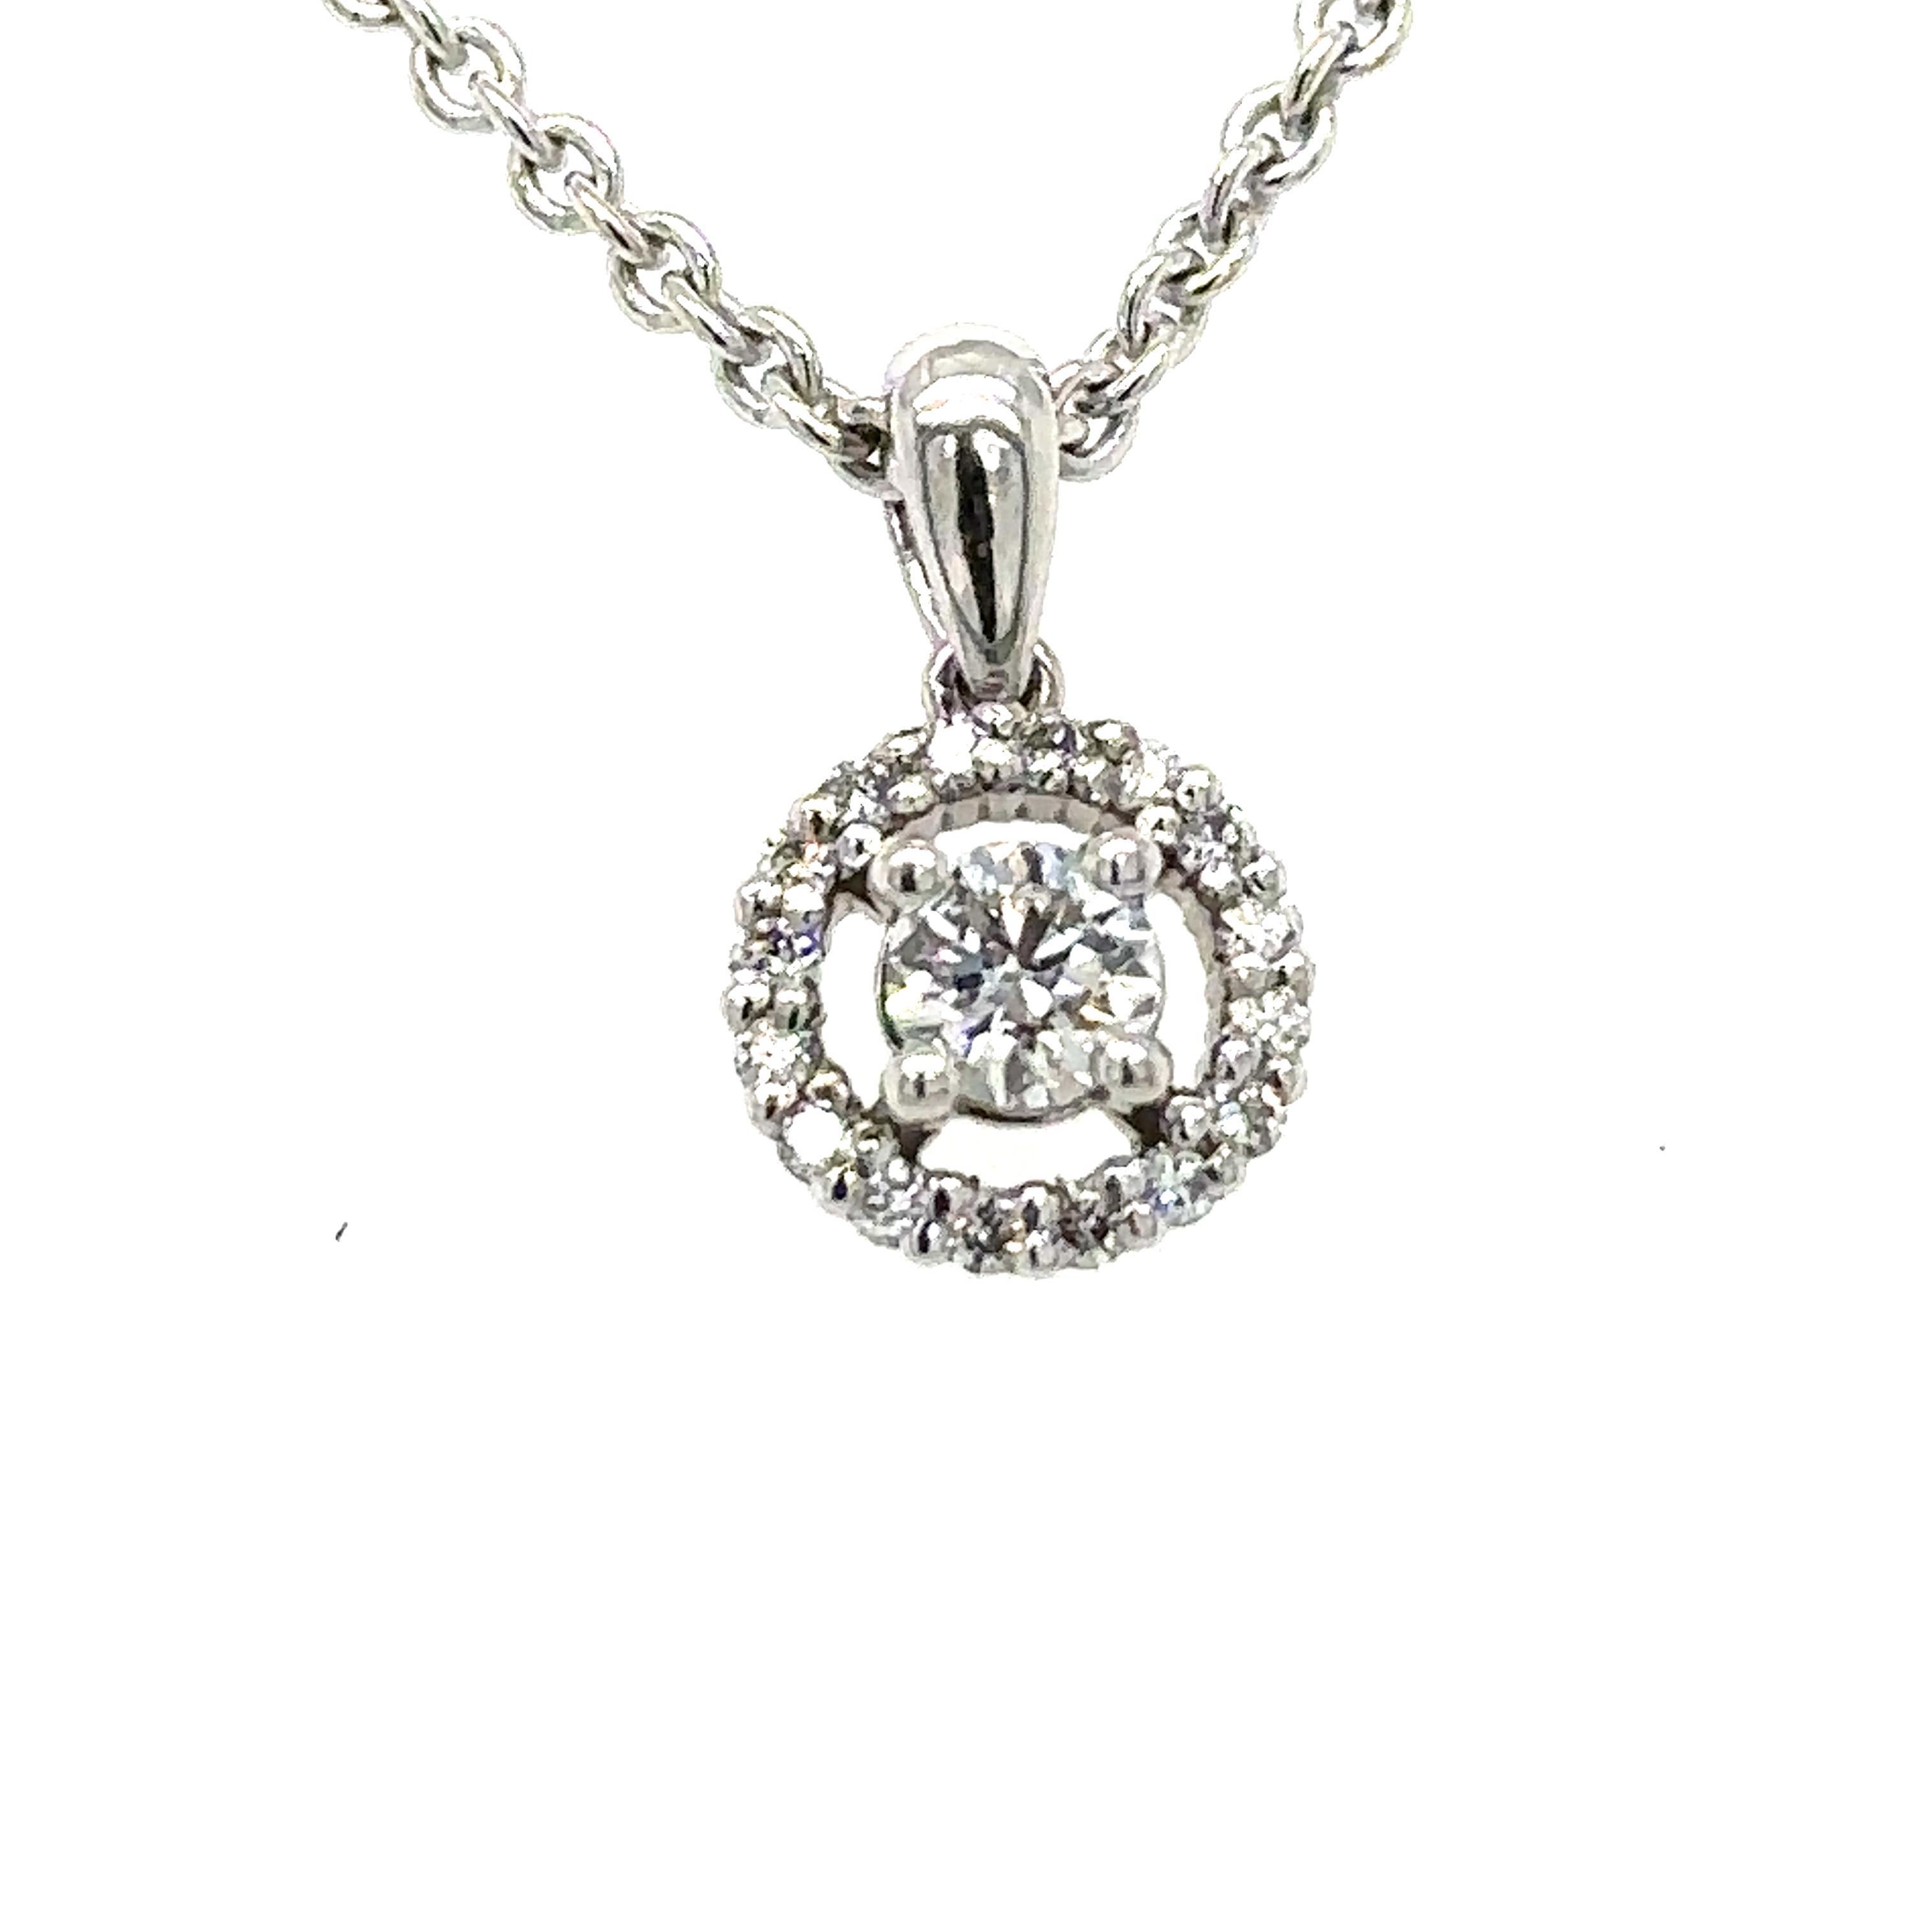 A Diamond Round Cluster Necklace, with a round brilliant cut diamond within a border of 16 round brilliant cut diamonds on a 9ct white gold trace link neck chain.

Diamonds 1 = 0.18ct (estimated), F/VS

16 = 0.13ct (estimated), F/VS
Metal: 9ct White